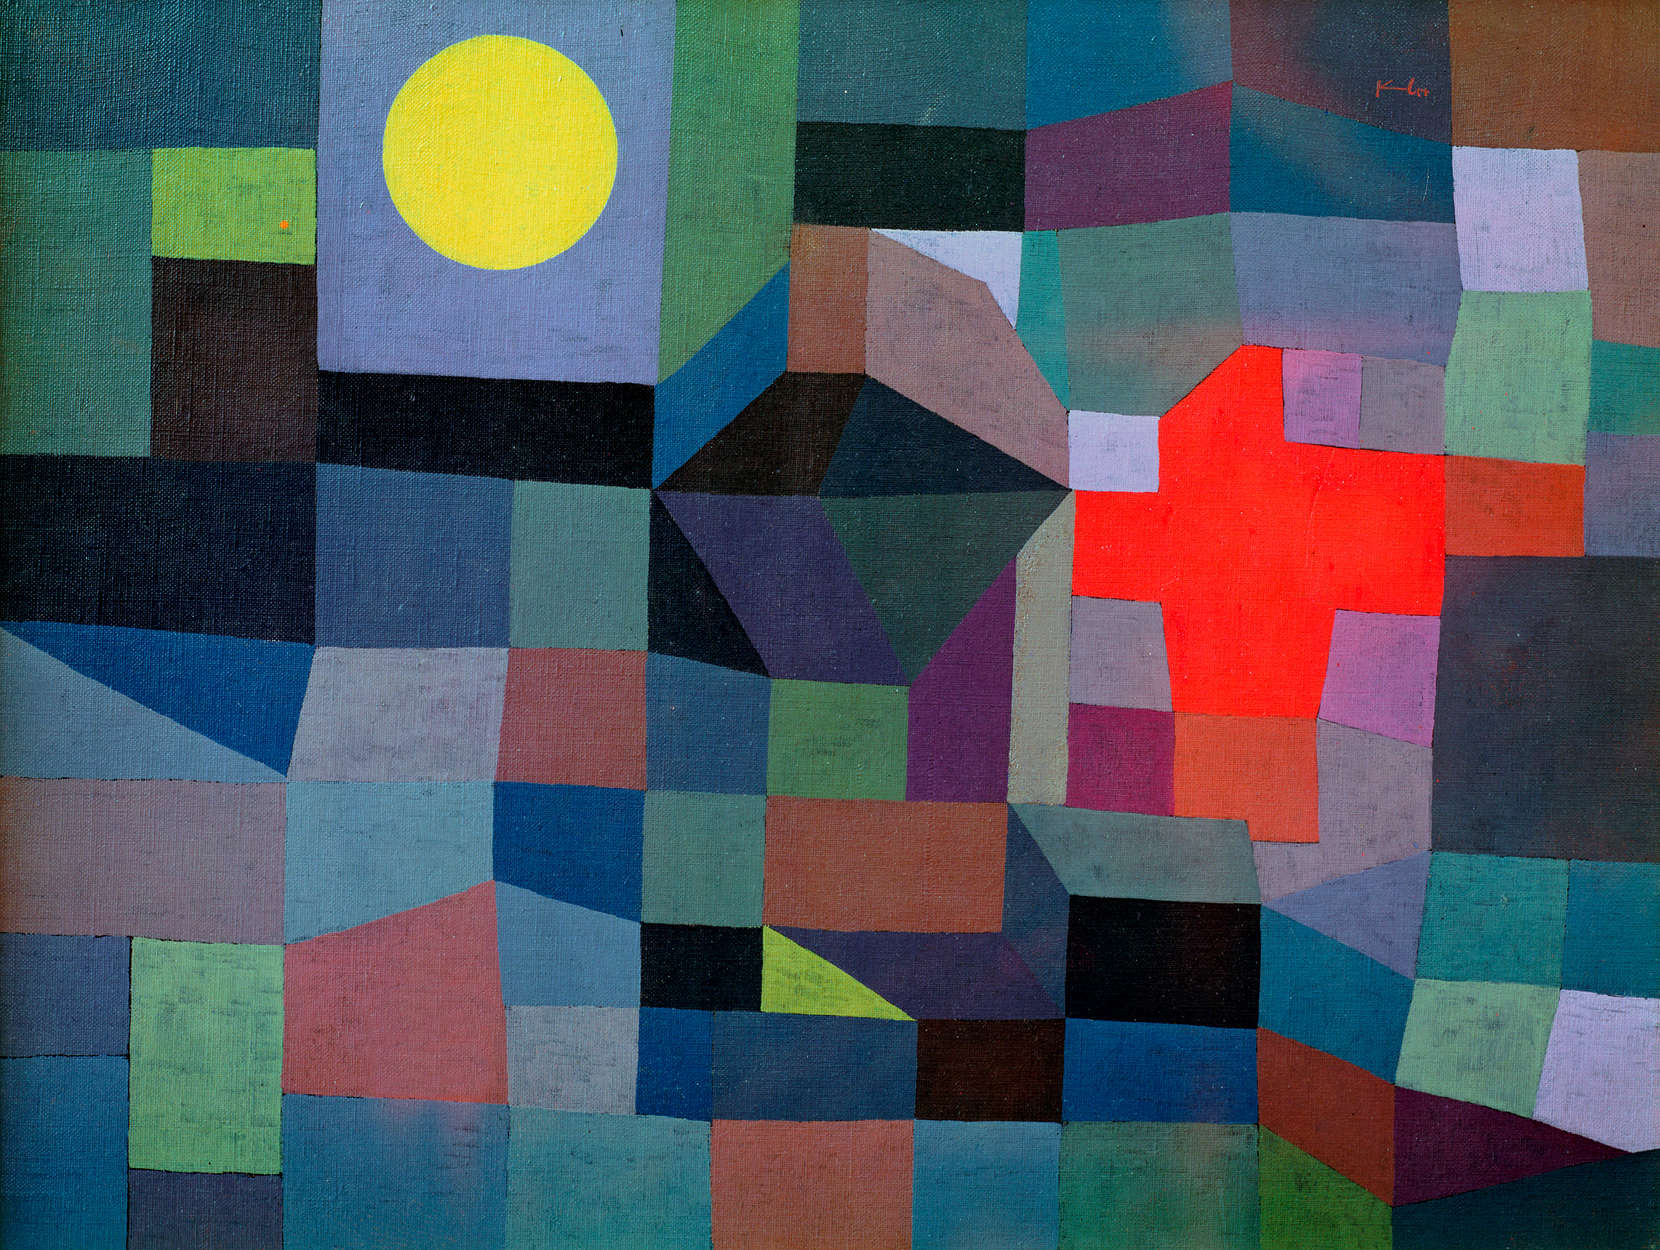             Fotomurali "Fuoco a luna piena" di Paul Klee
        